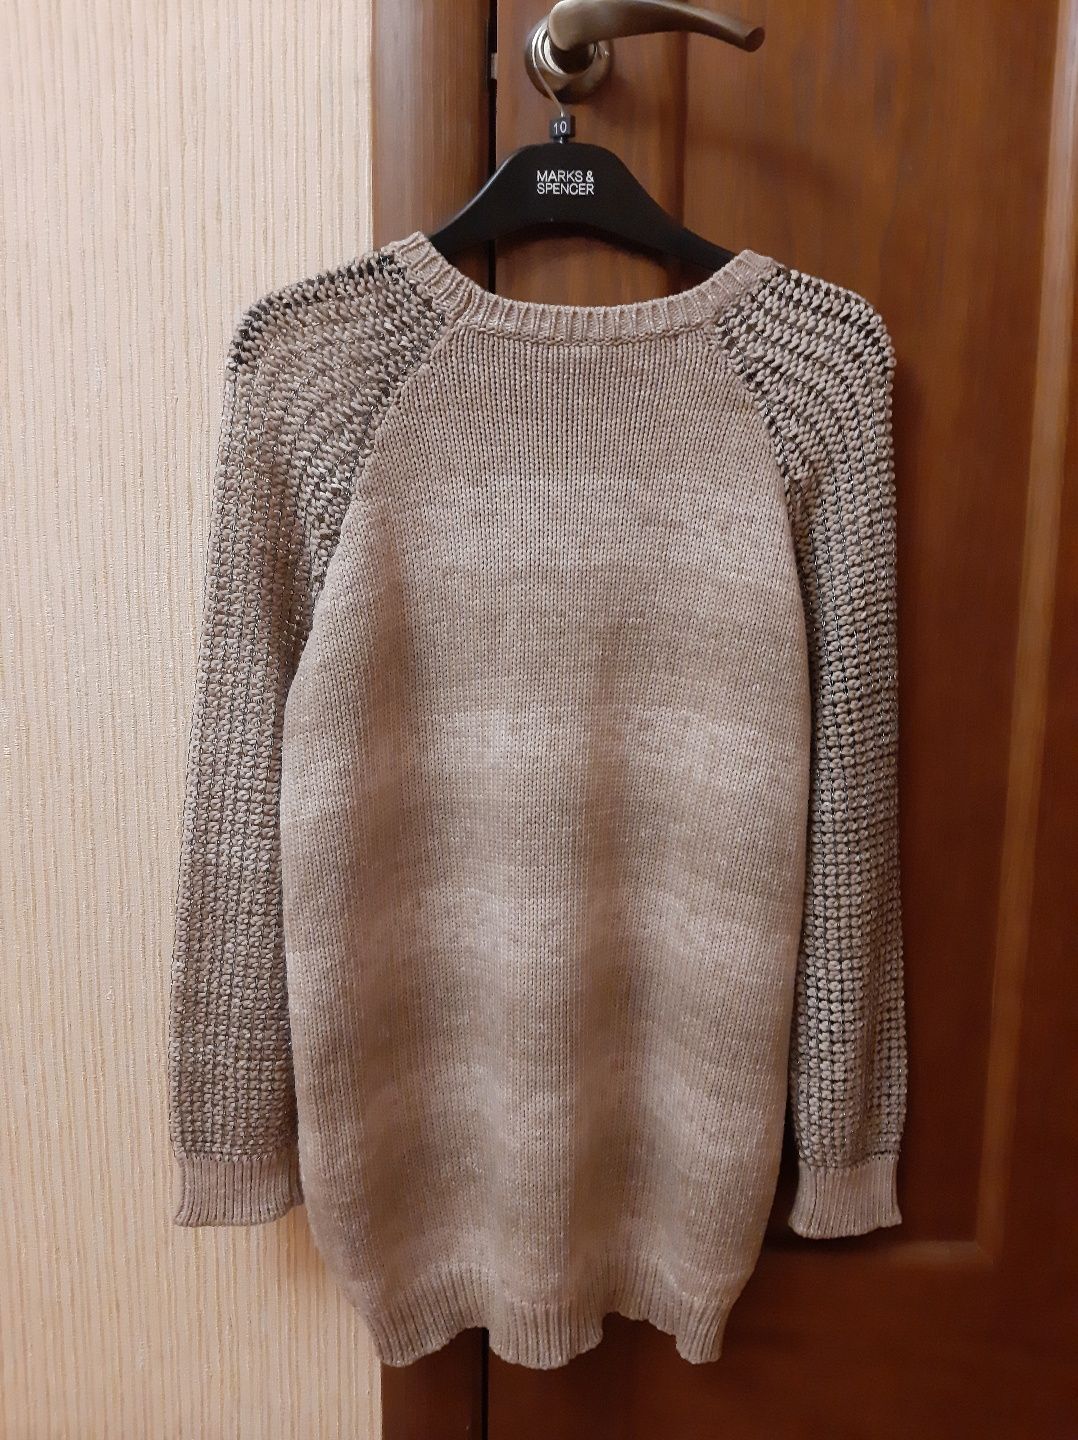 Pinko tag джемпер/свитер/пуловер женский.Италия размер L